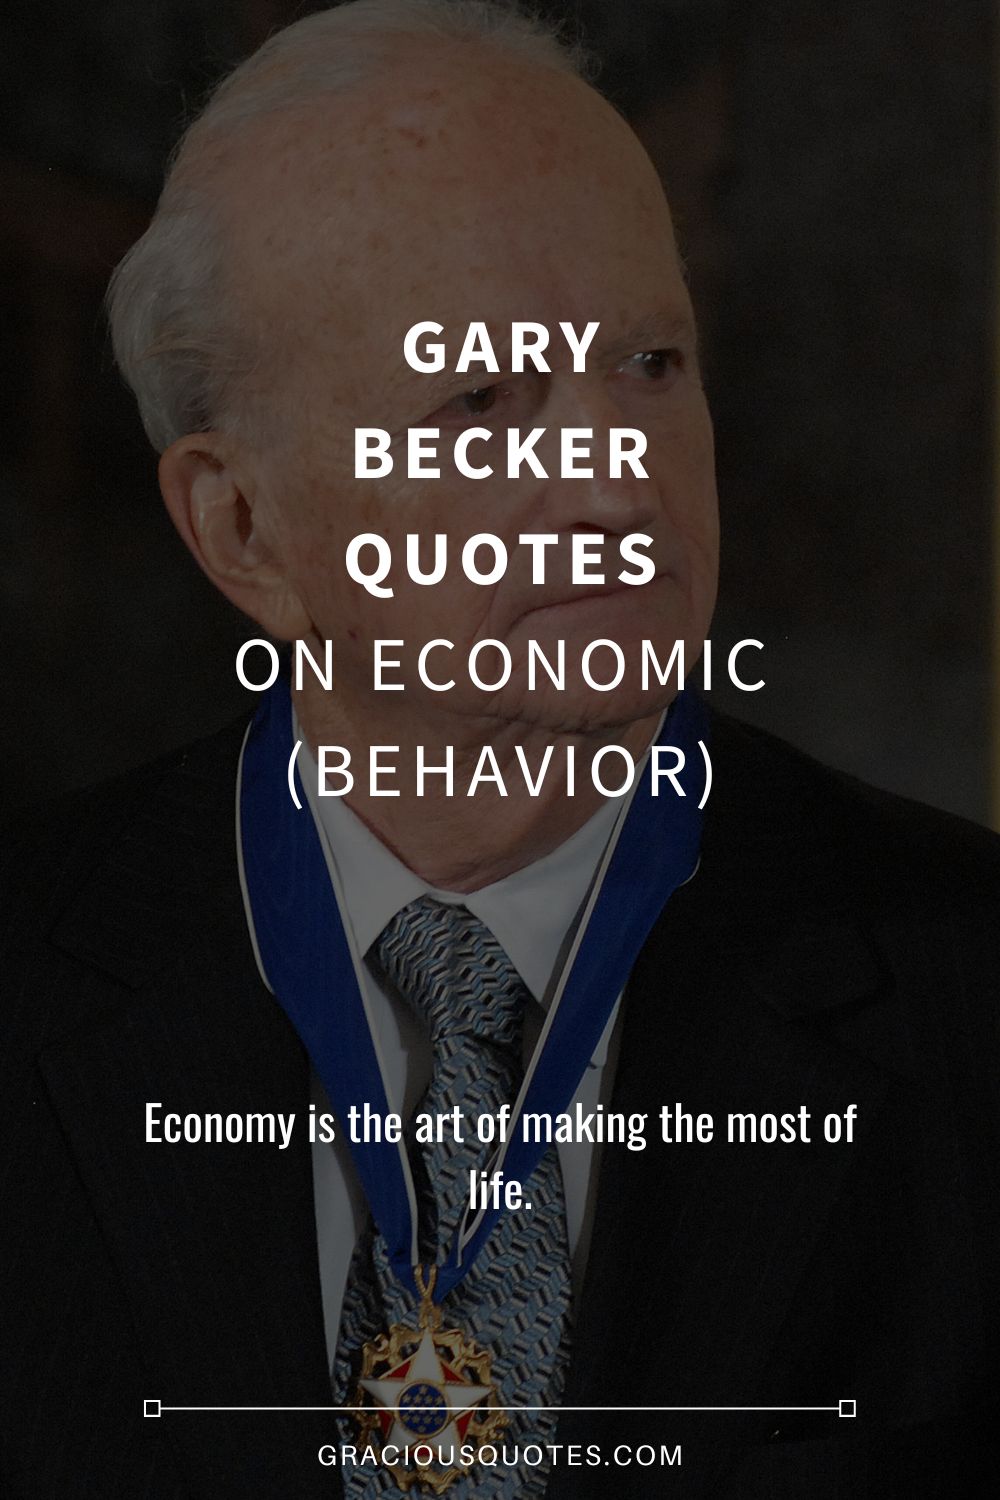 Gary Becker Quotes on Economic (BEHAVIOR) - Gracious Quotes